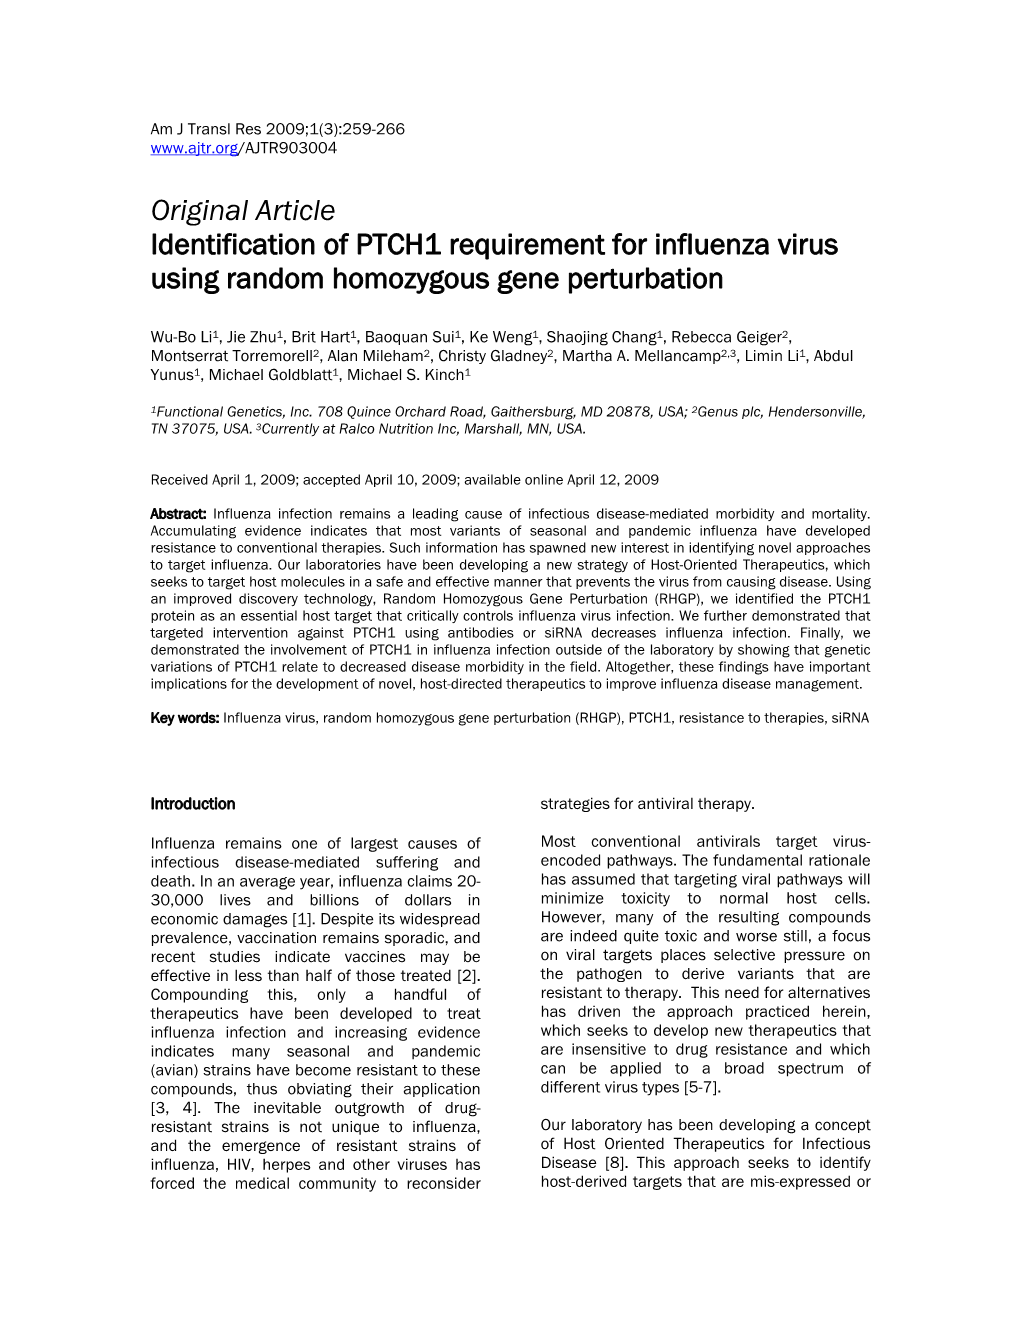 Identification of PTCH1 Requirement for Influenza Virus Using Random Homozygous Gene Perturbation